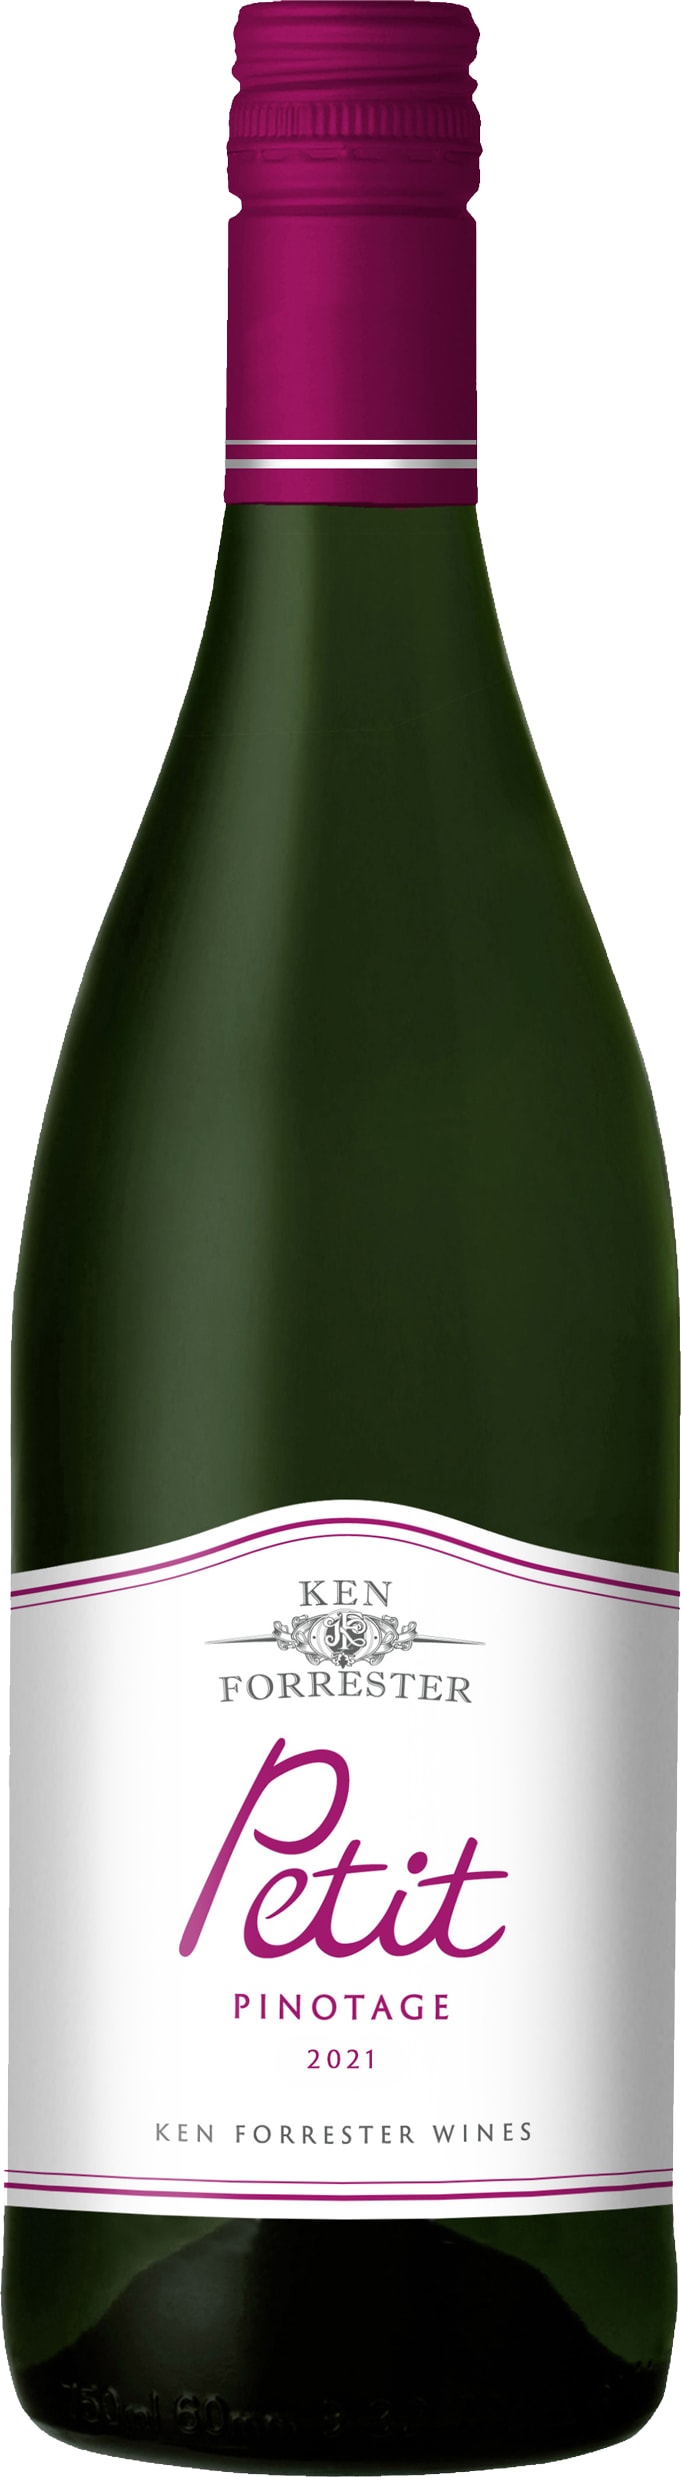 Ken Forrester Wines Petit Pinotage 2022 75cl - Buy Ken Forrester Wines Wines from GREAT WINES DIRECT wine shop